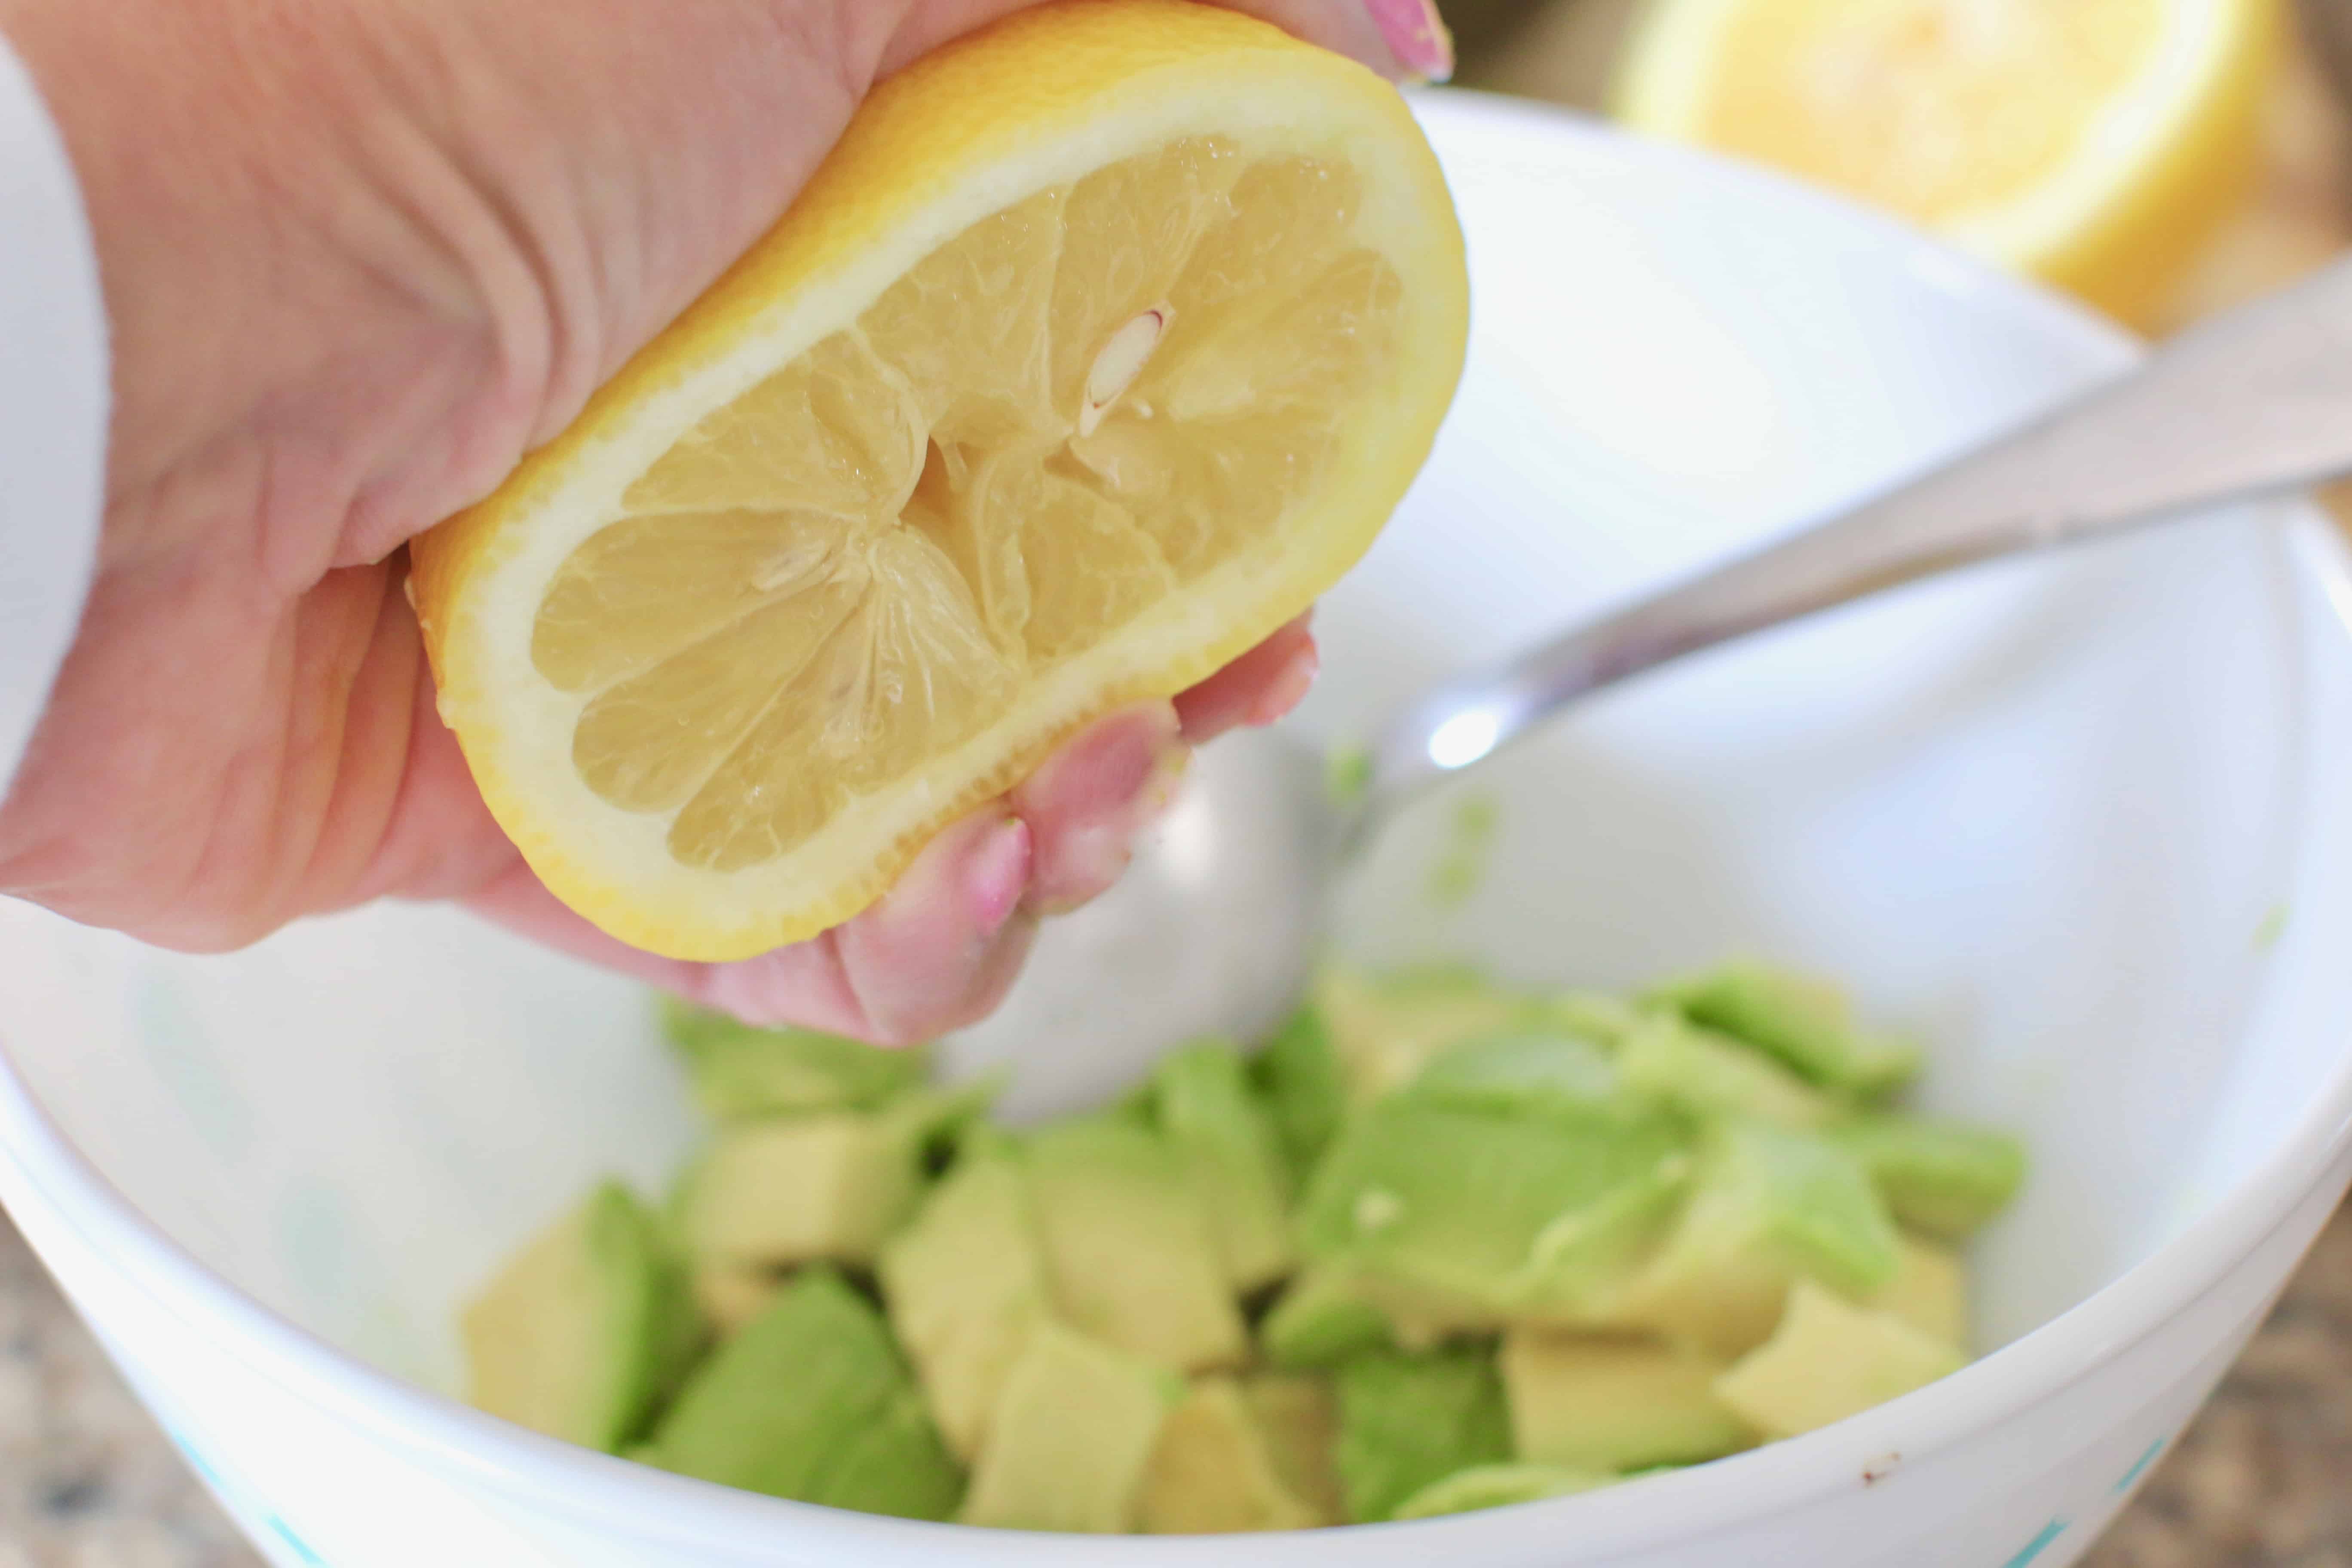 lemon juice squeezed onto diced avocado.